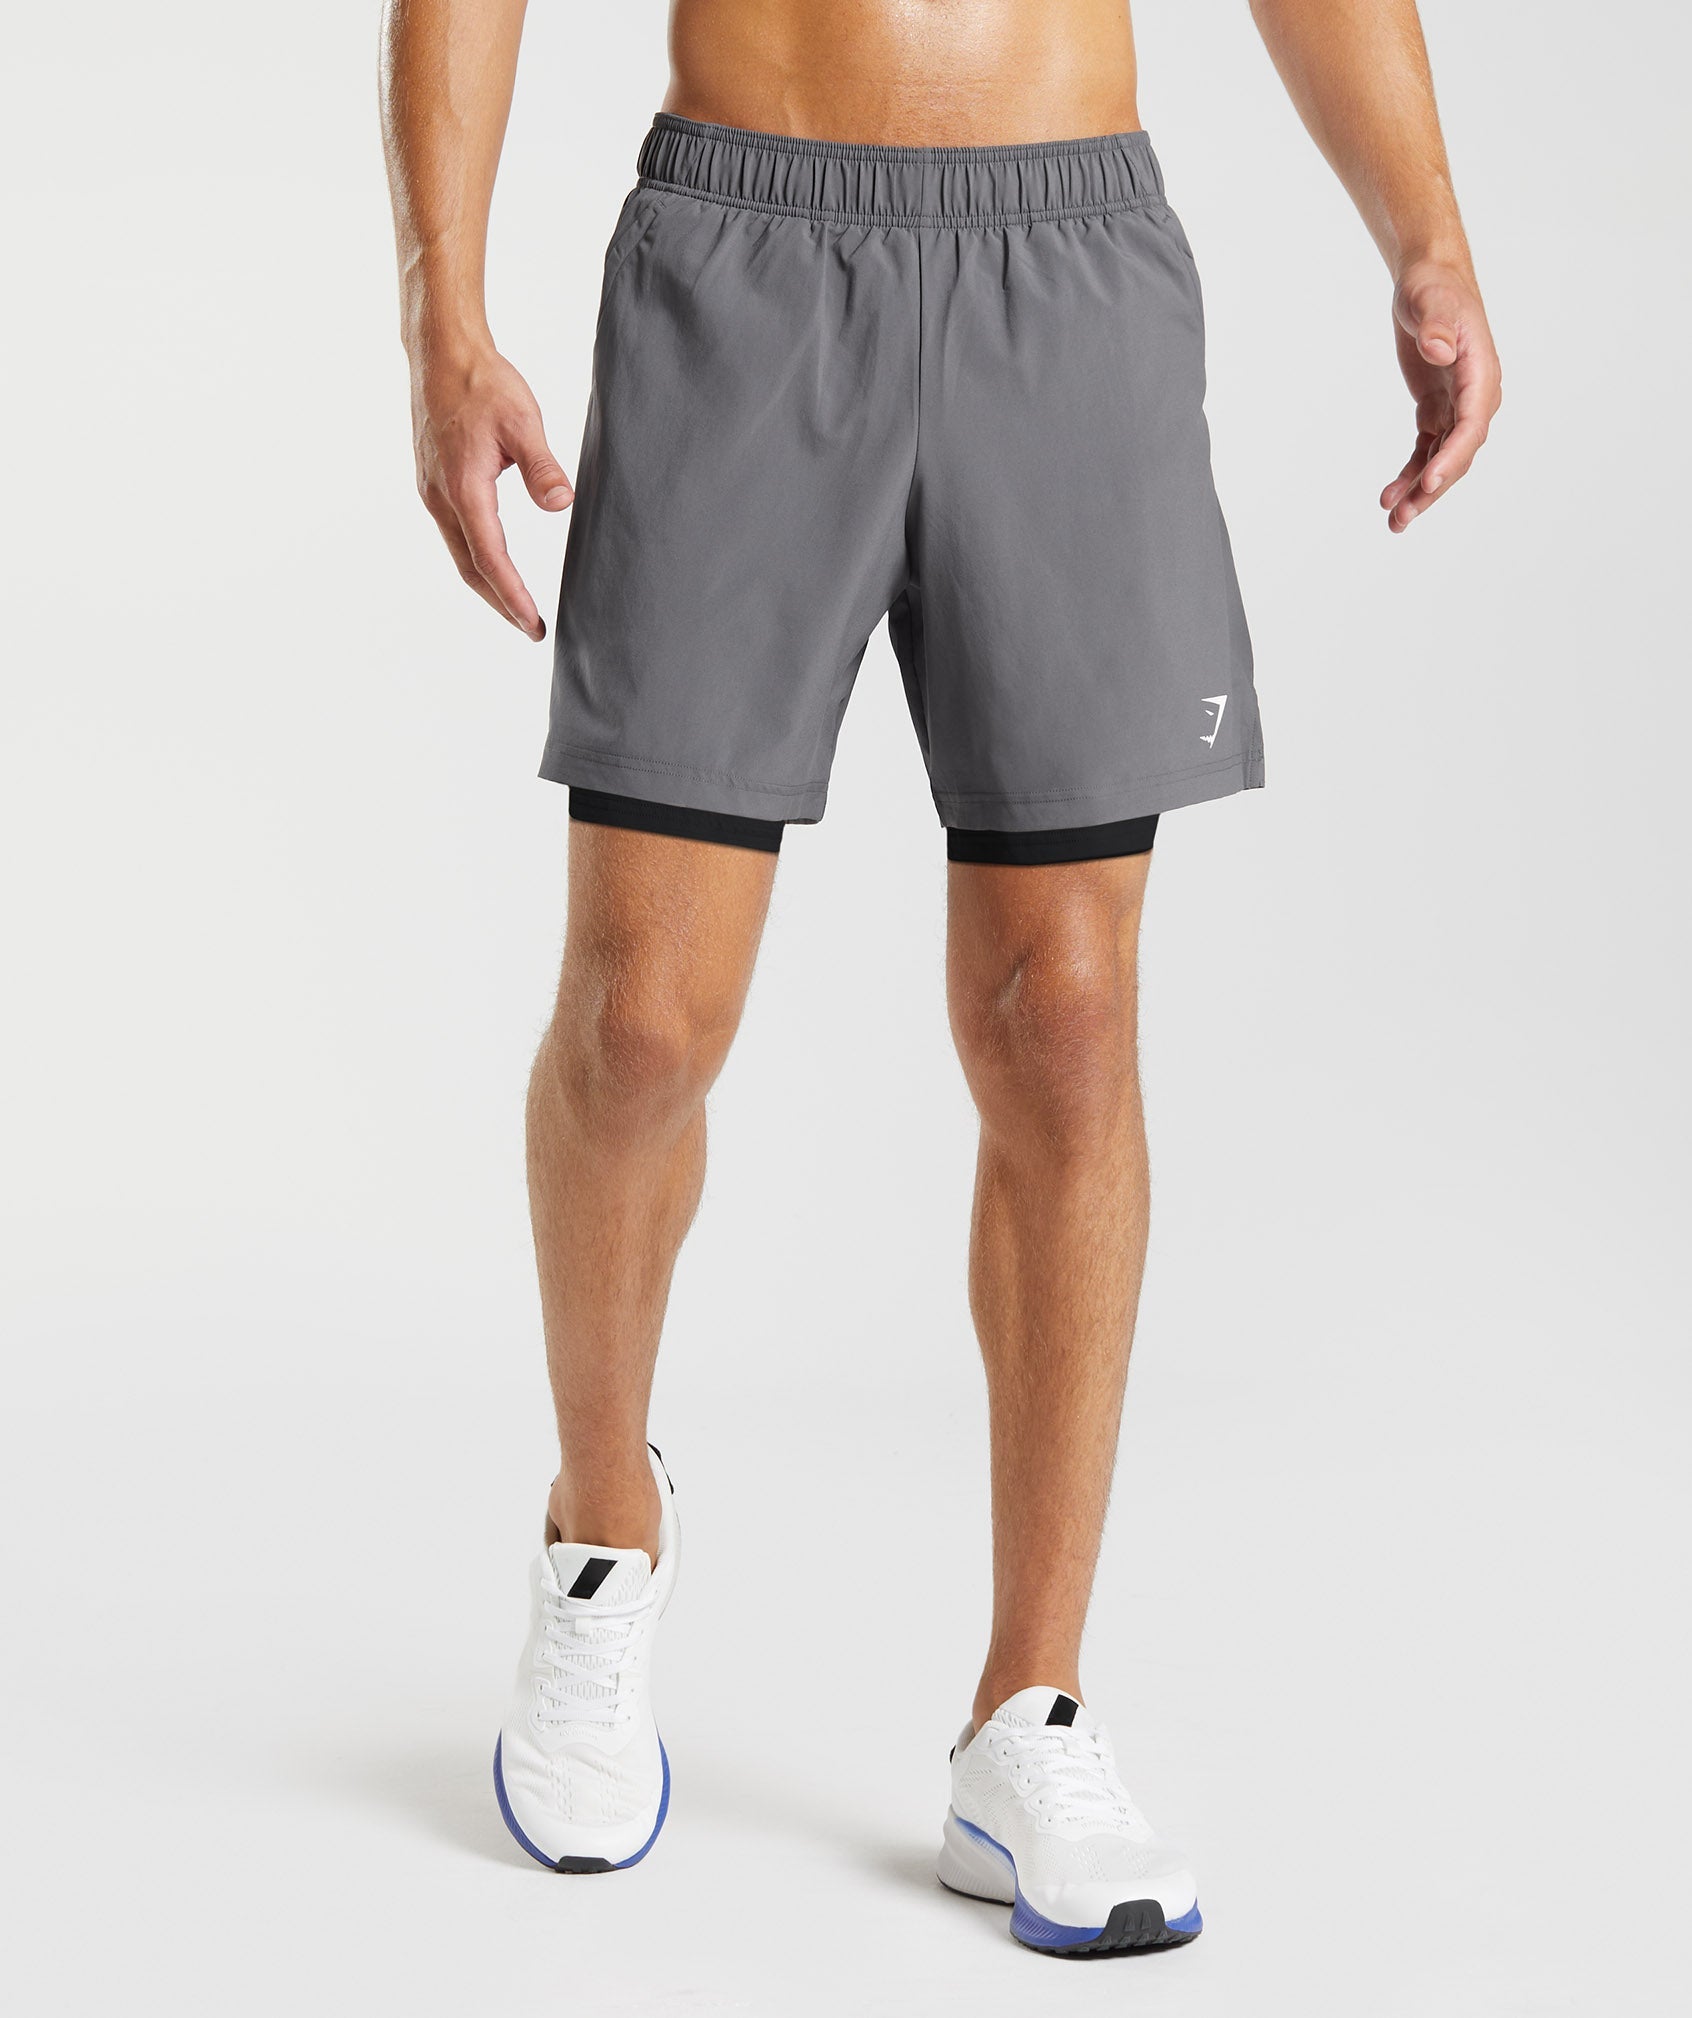 Men's Running Shorts - Gymshark